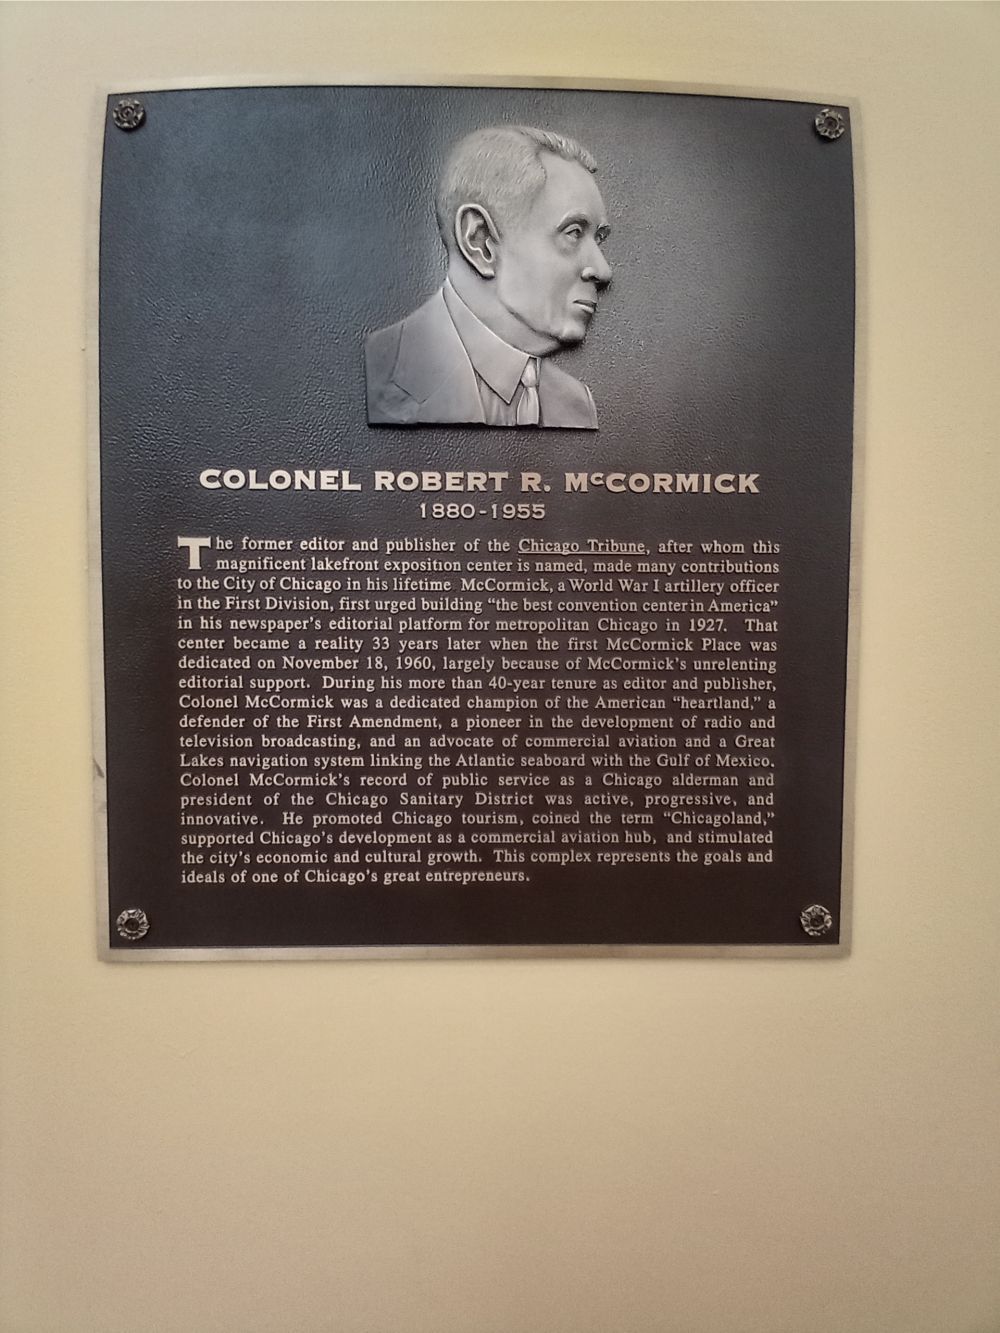 Col. Robert R. McCormick Plaque